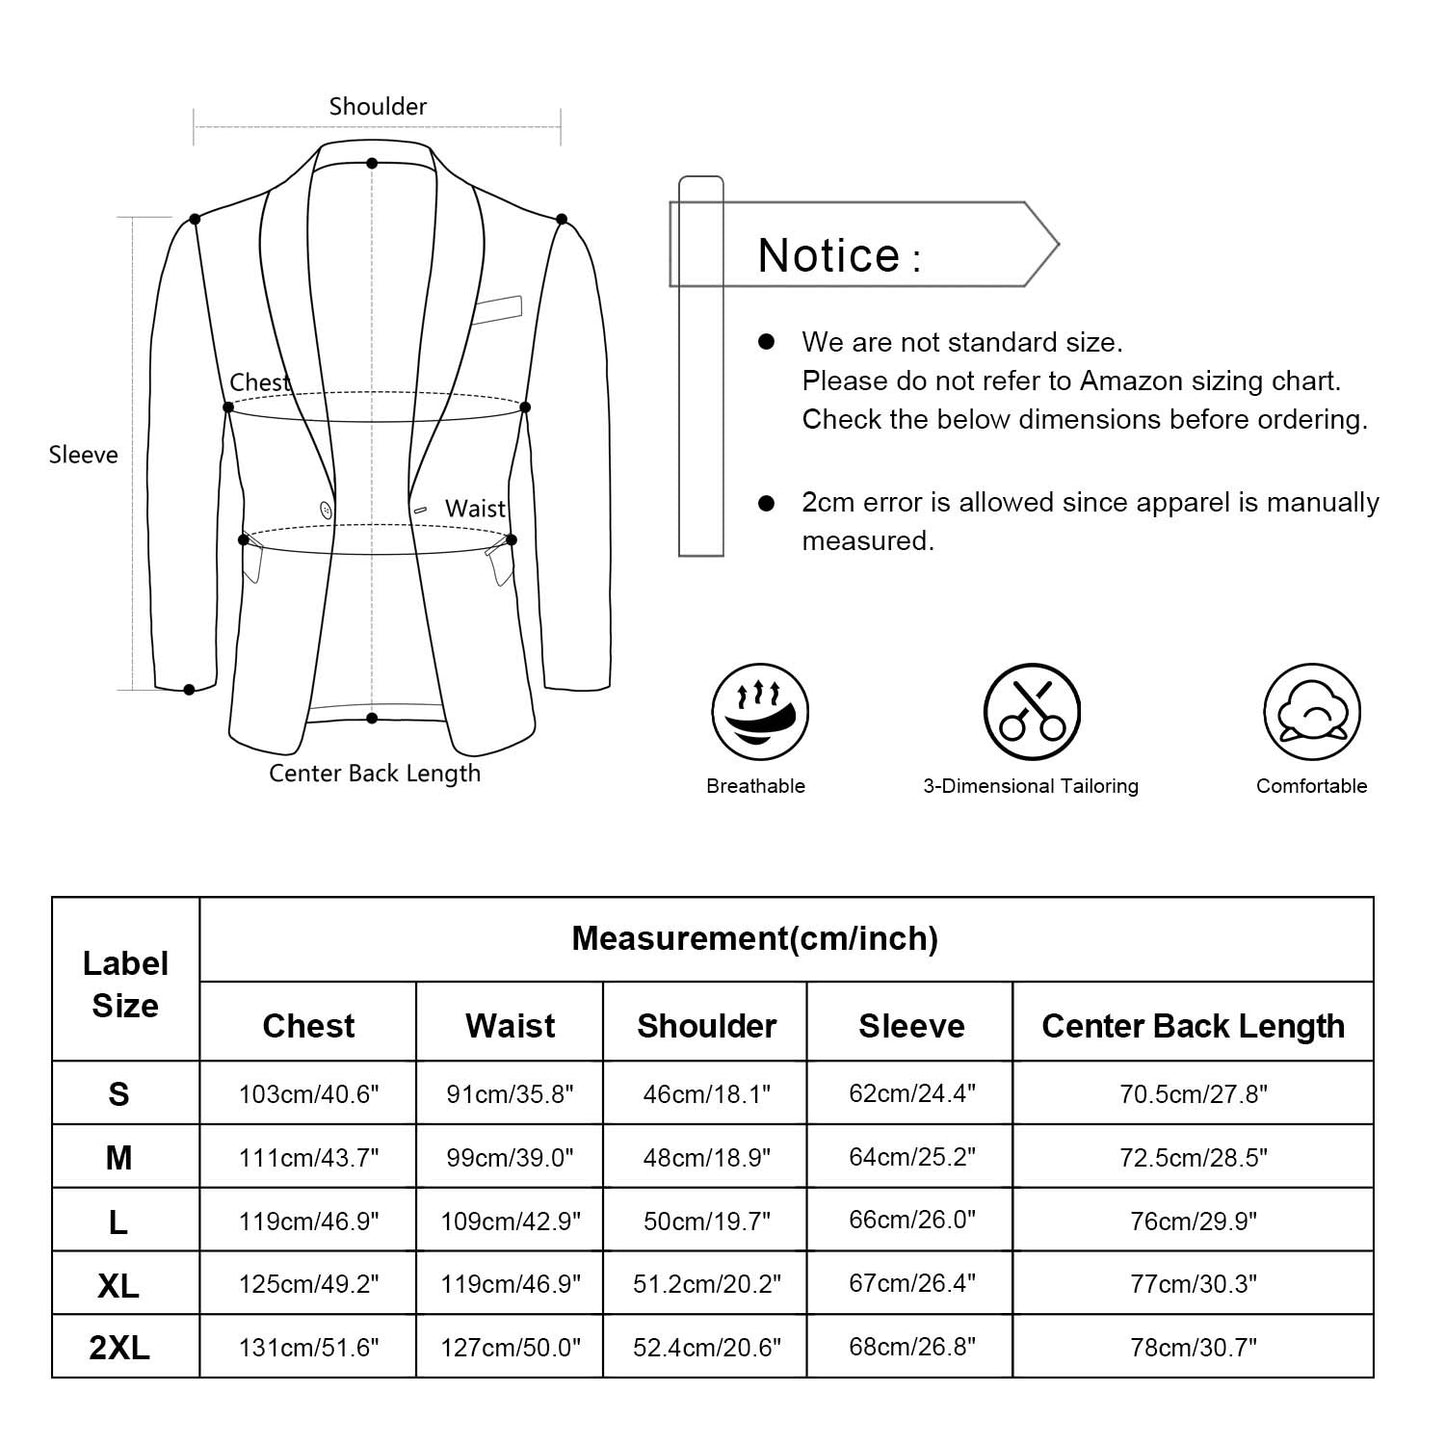 Men's Tuxedos Shawl Lapel One Button Fashion Jacquard Suit Blazer Jacket for Party Prom Wedding, 027-Brown